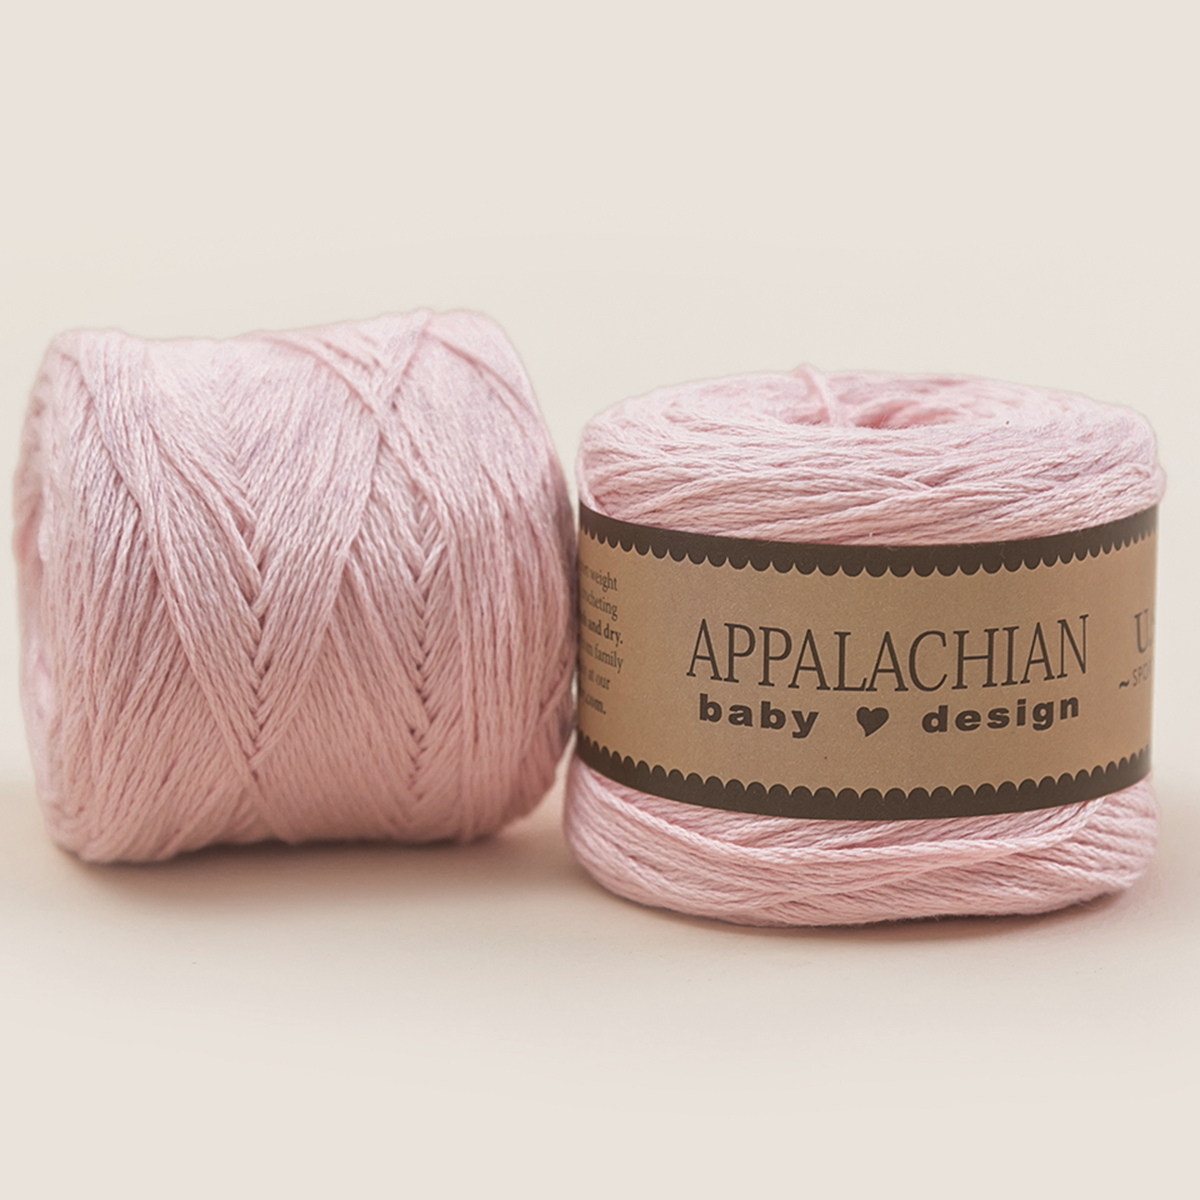 organic lightweight cotton muslin in blush color, 70 gr/m2